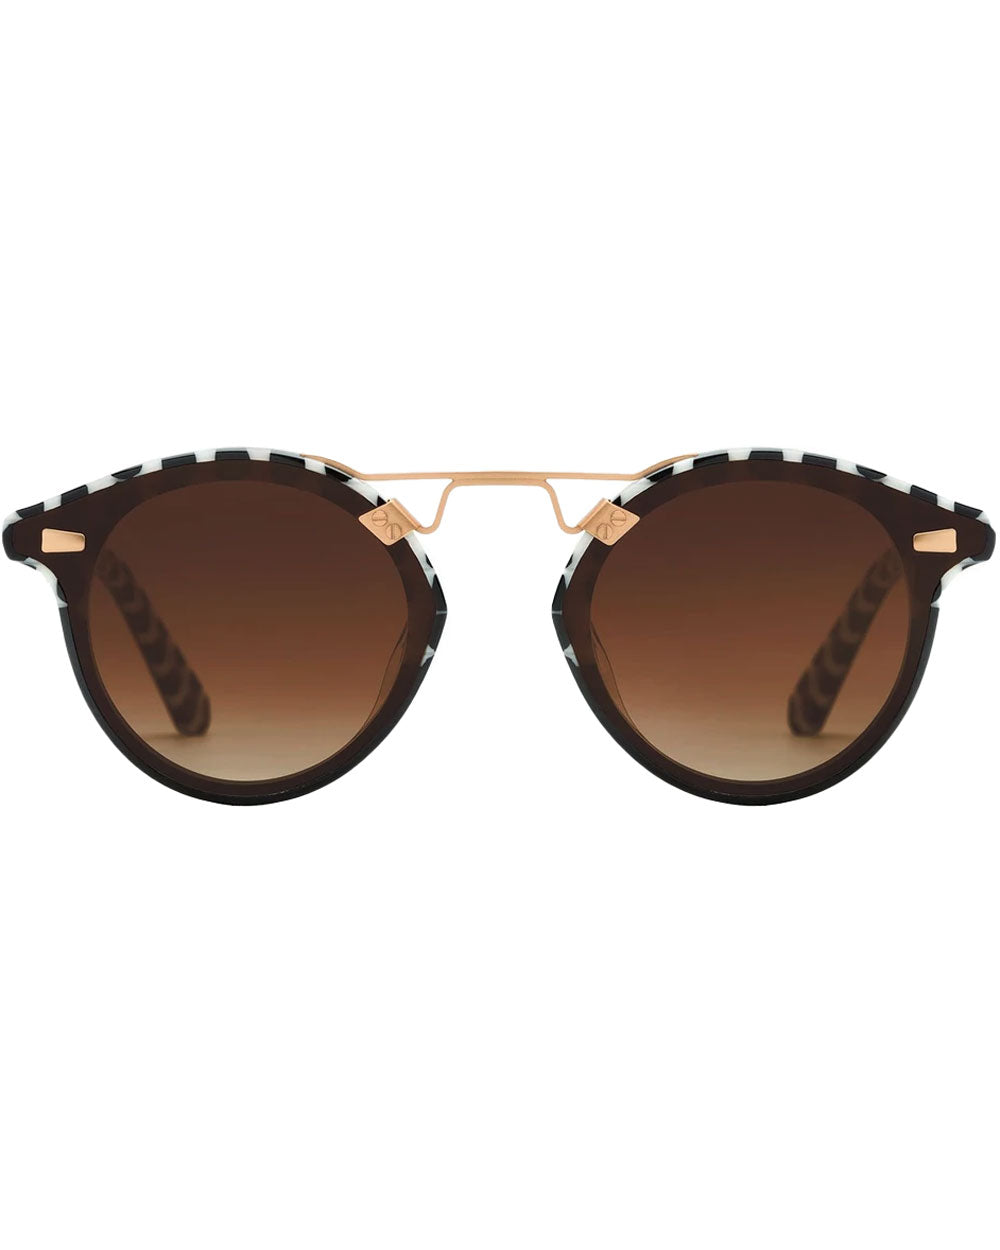 STL Nylon Sunglasses in Domino to Black